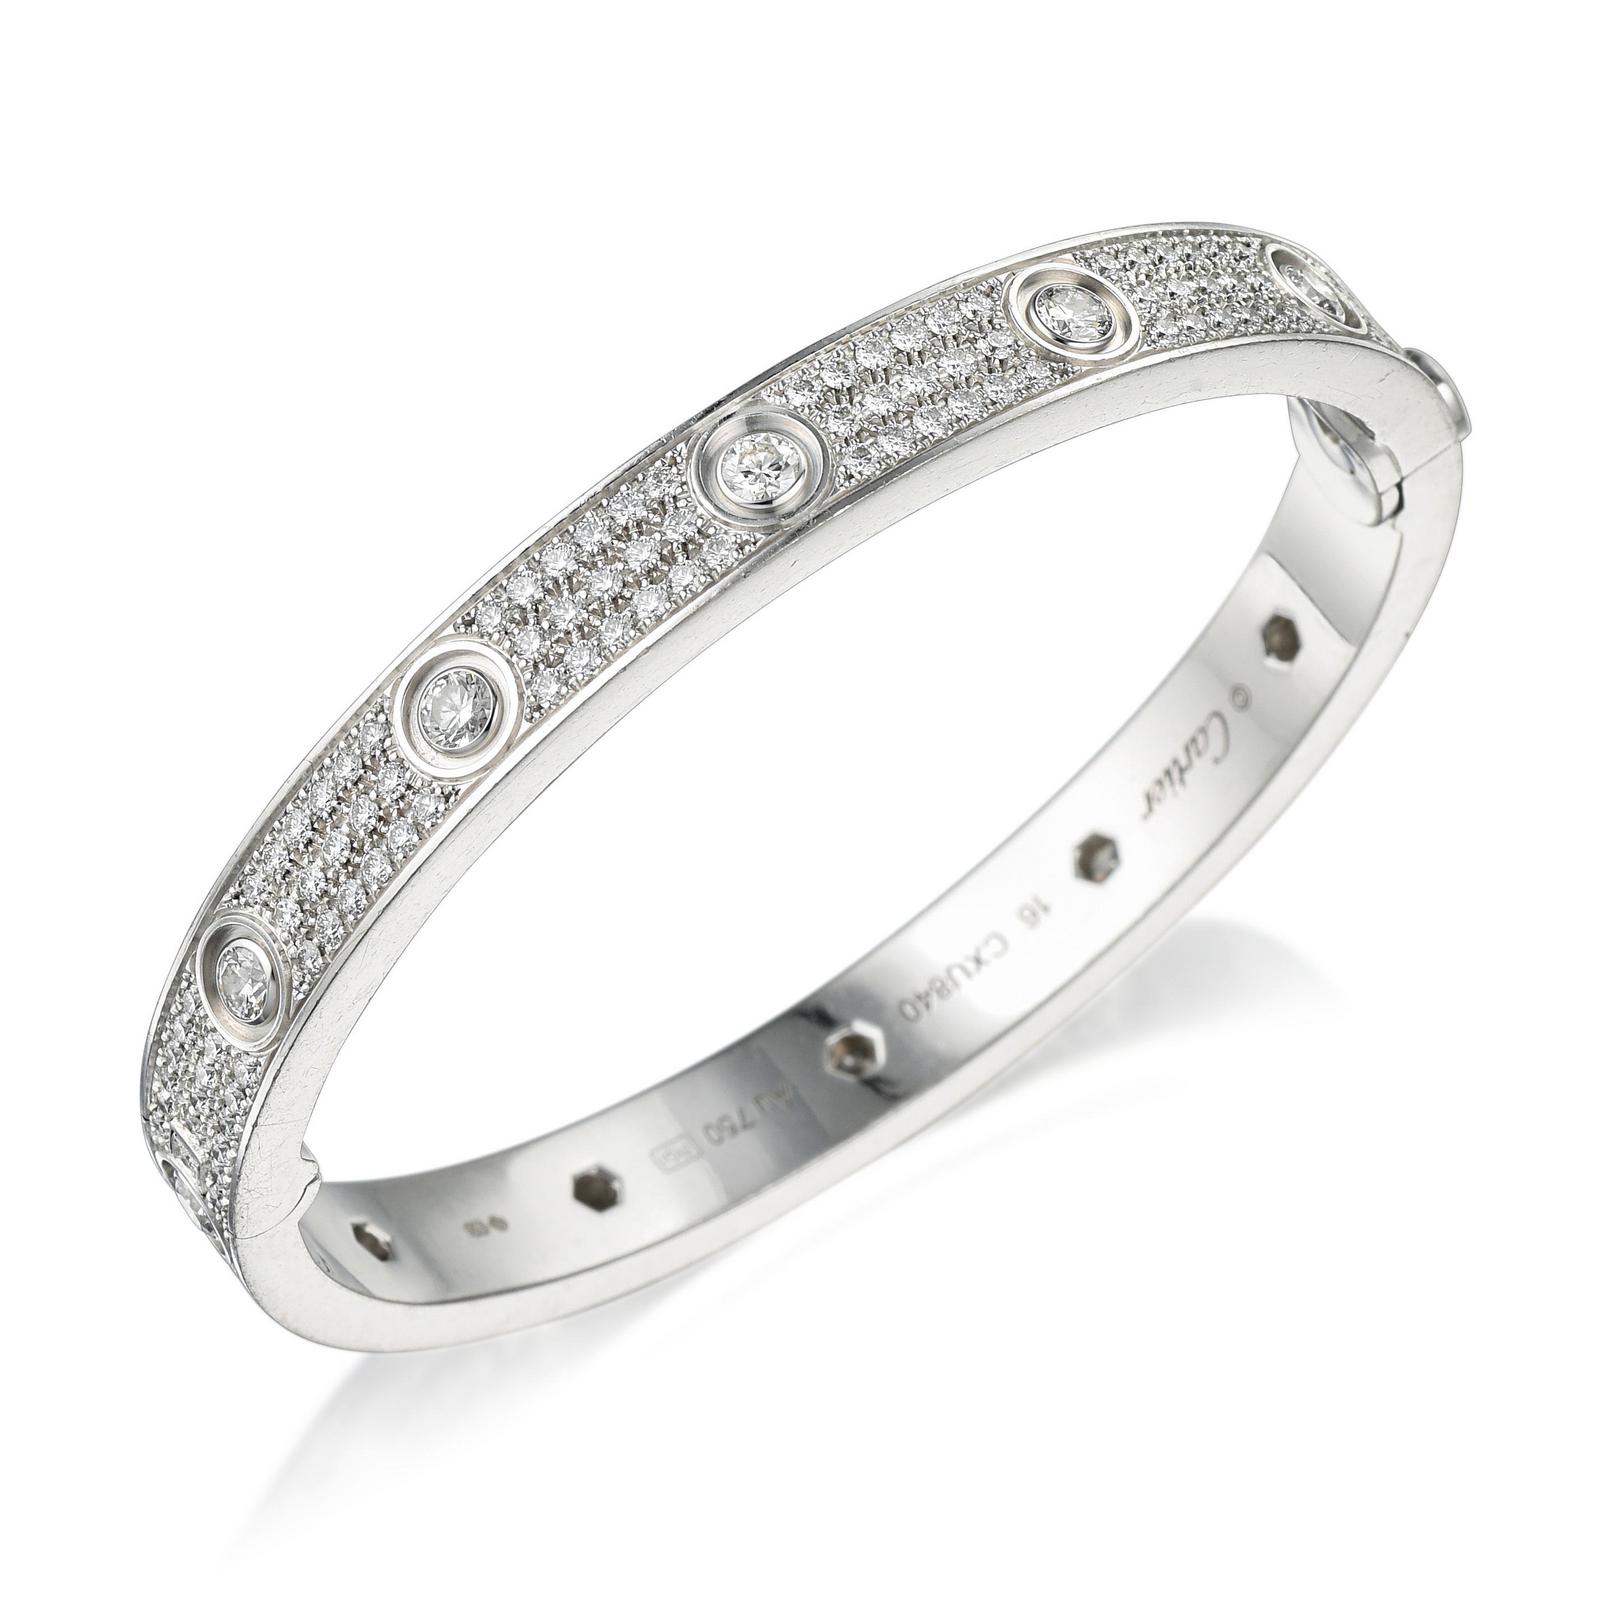 Cartier Full Diamond Love Bracelets